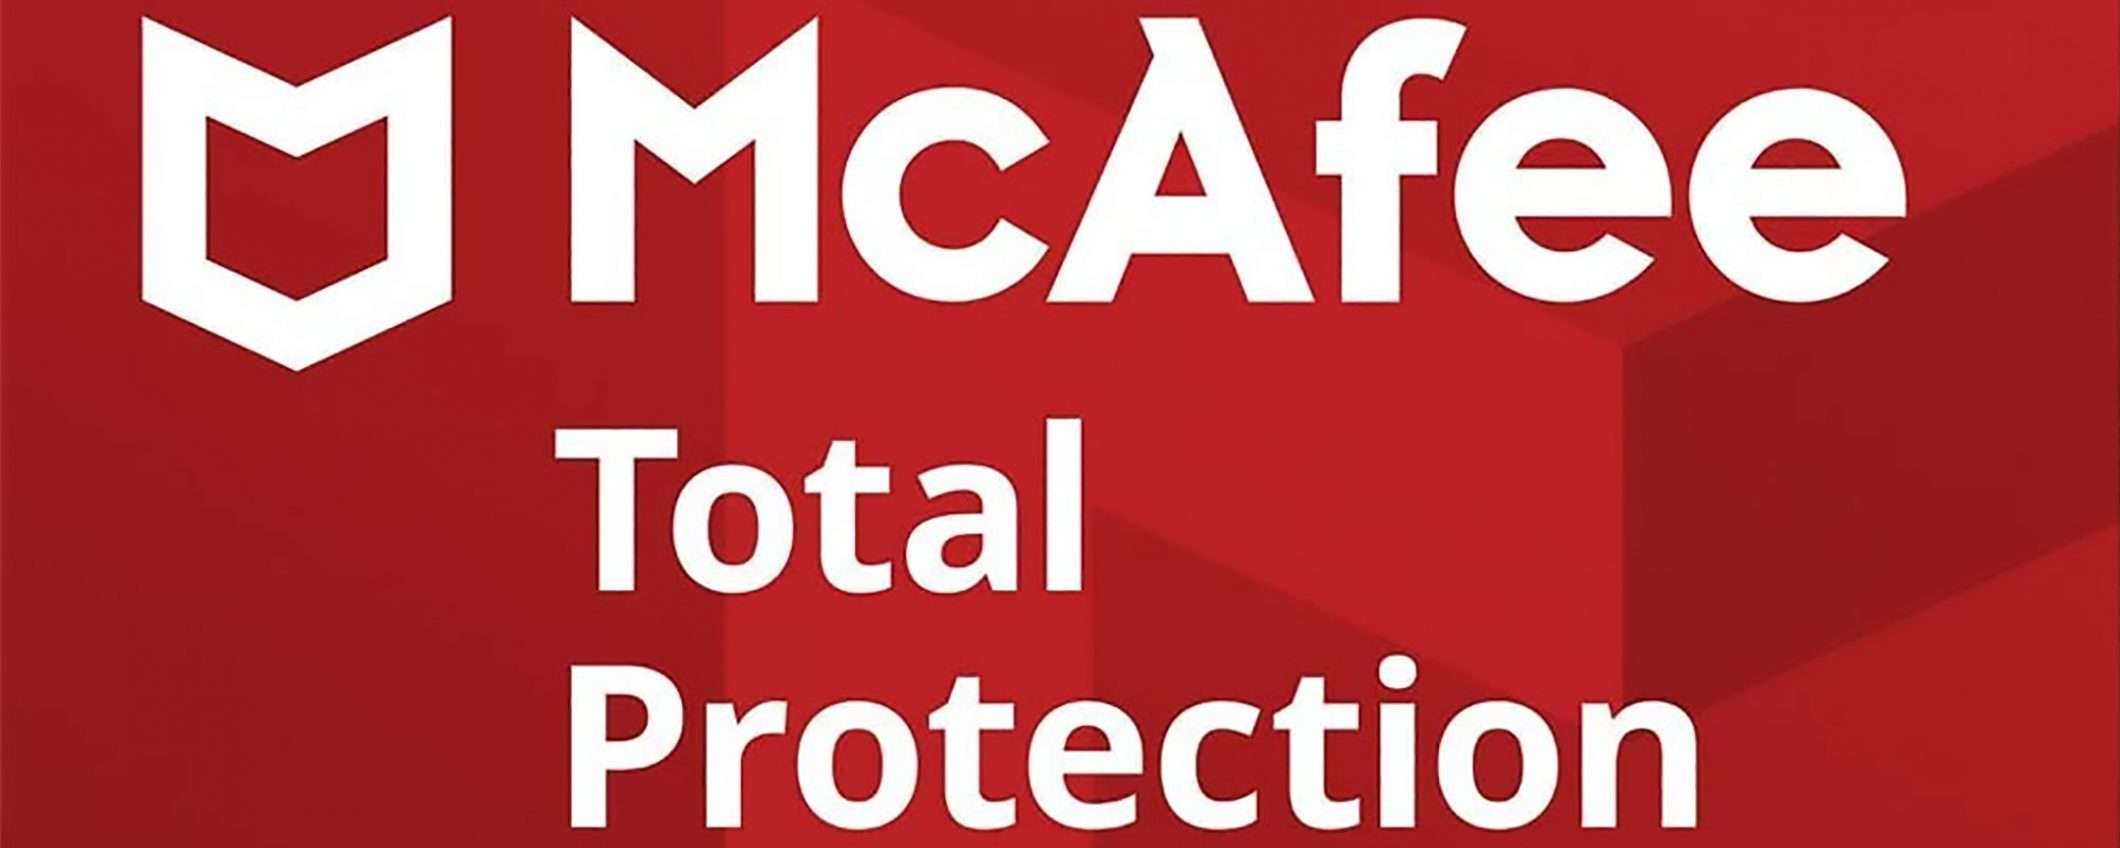 McAfee Total Protection, proteggi da 1 a 10 dispositivi e risparmia fino a 60€